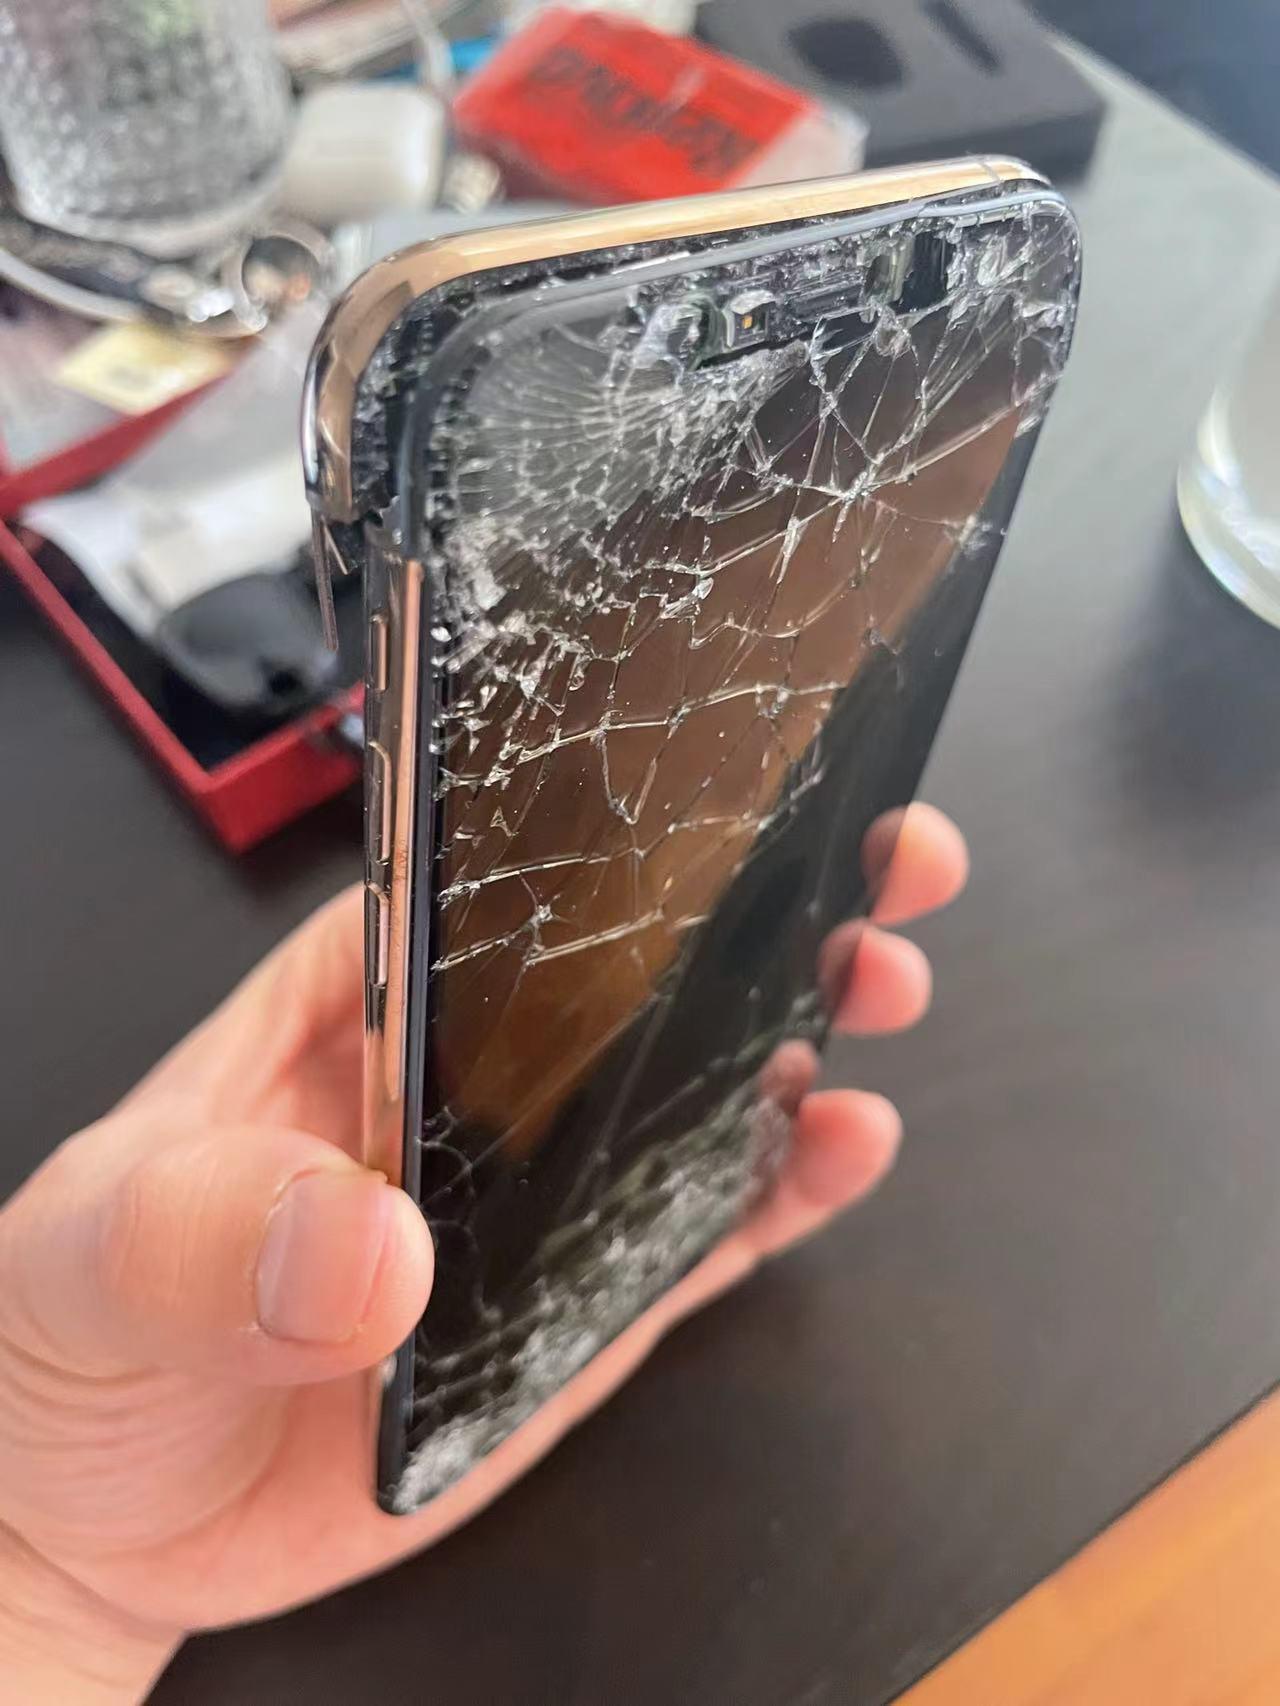 iPhonex这种程度的后盖碎了换玻璃多少钱？ - 知乎